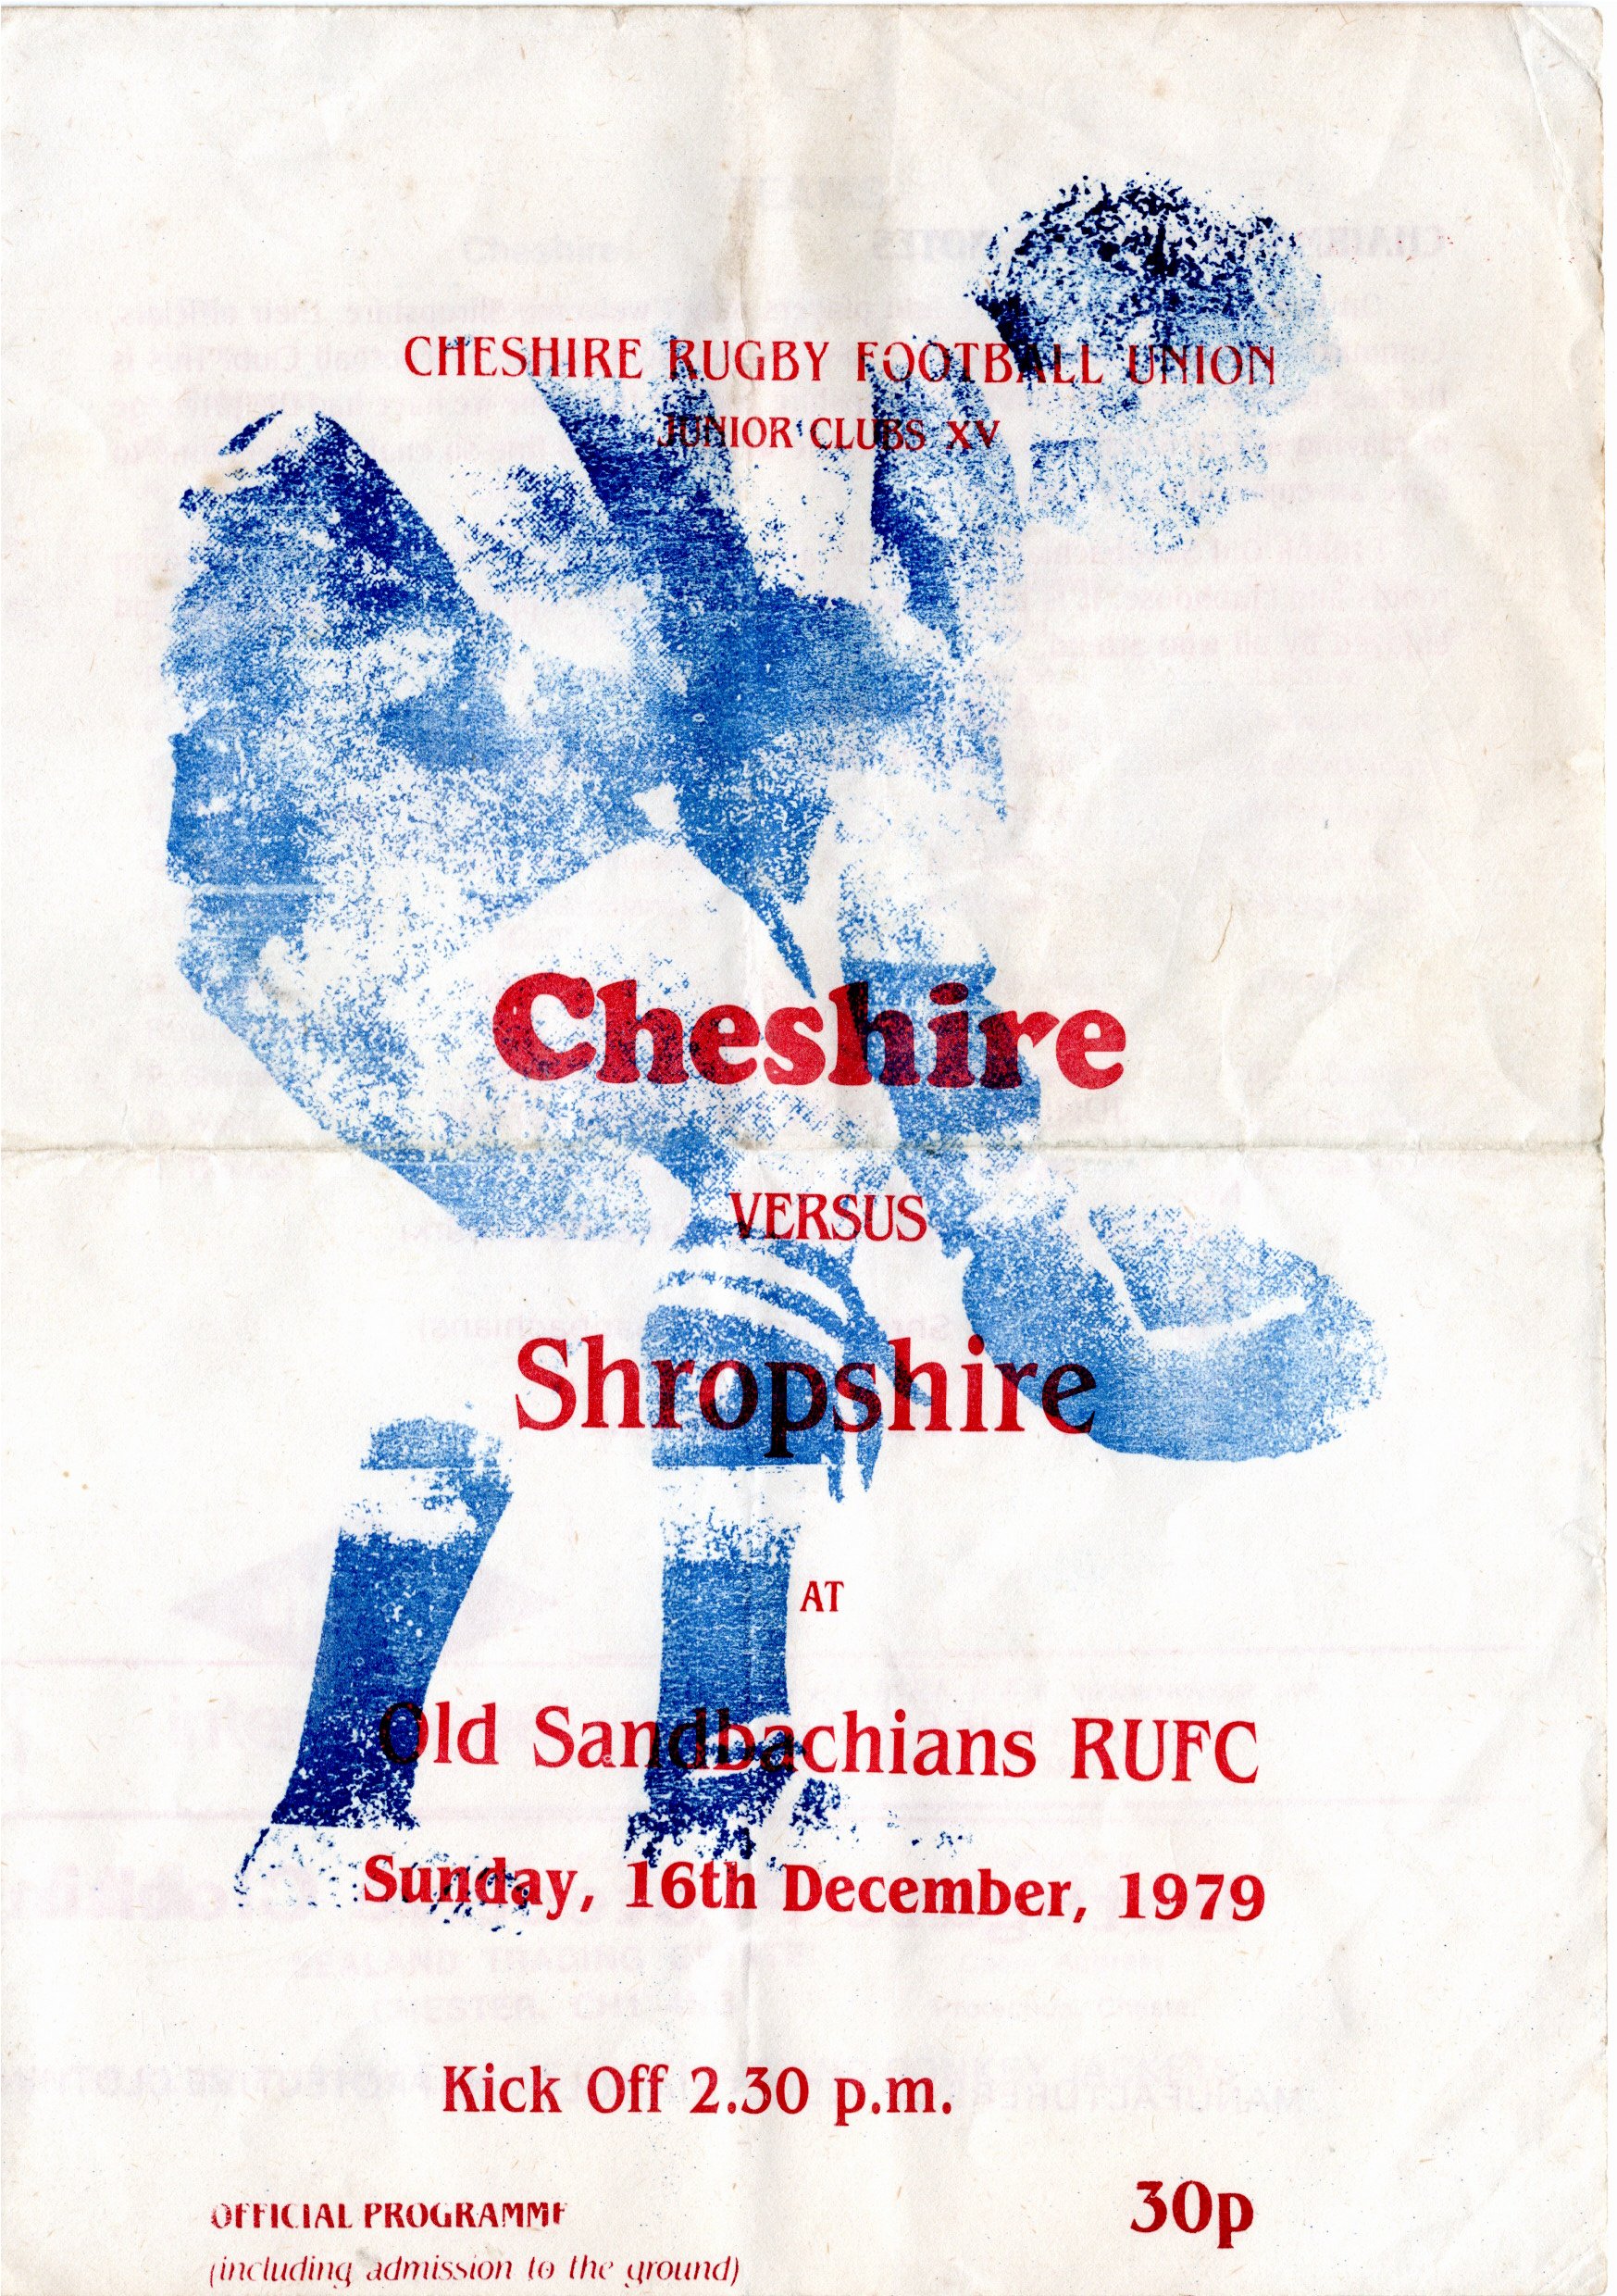 Old Instonians RUFC, 1979, Cheshire v Shropshire